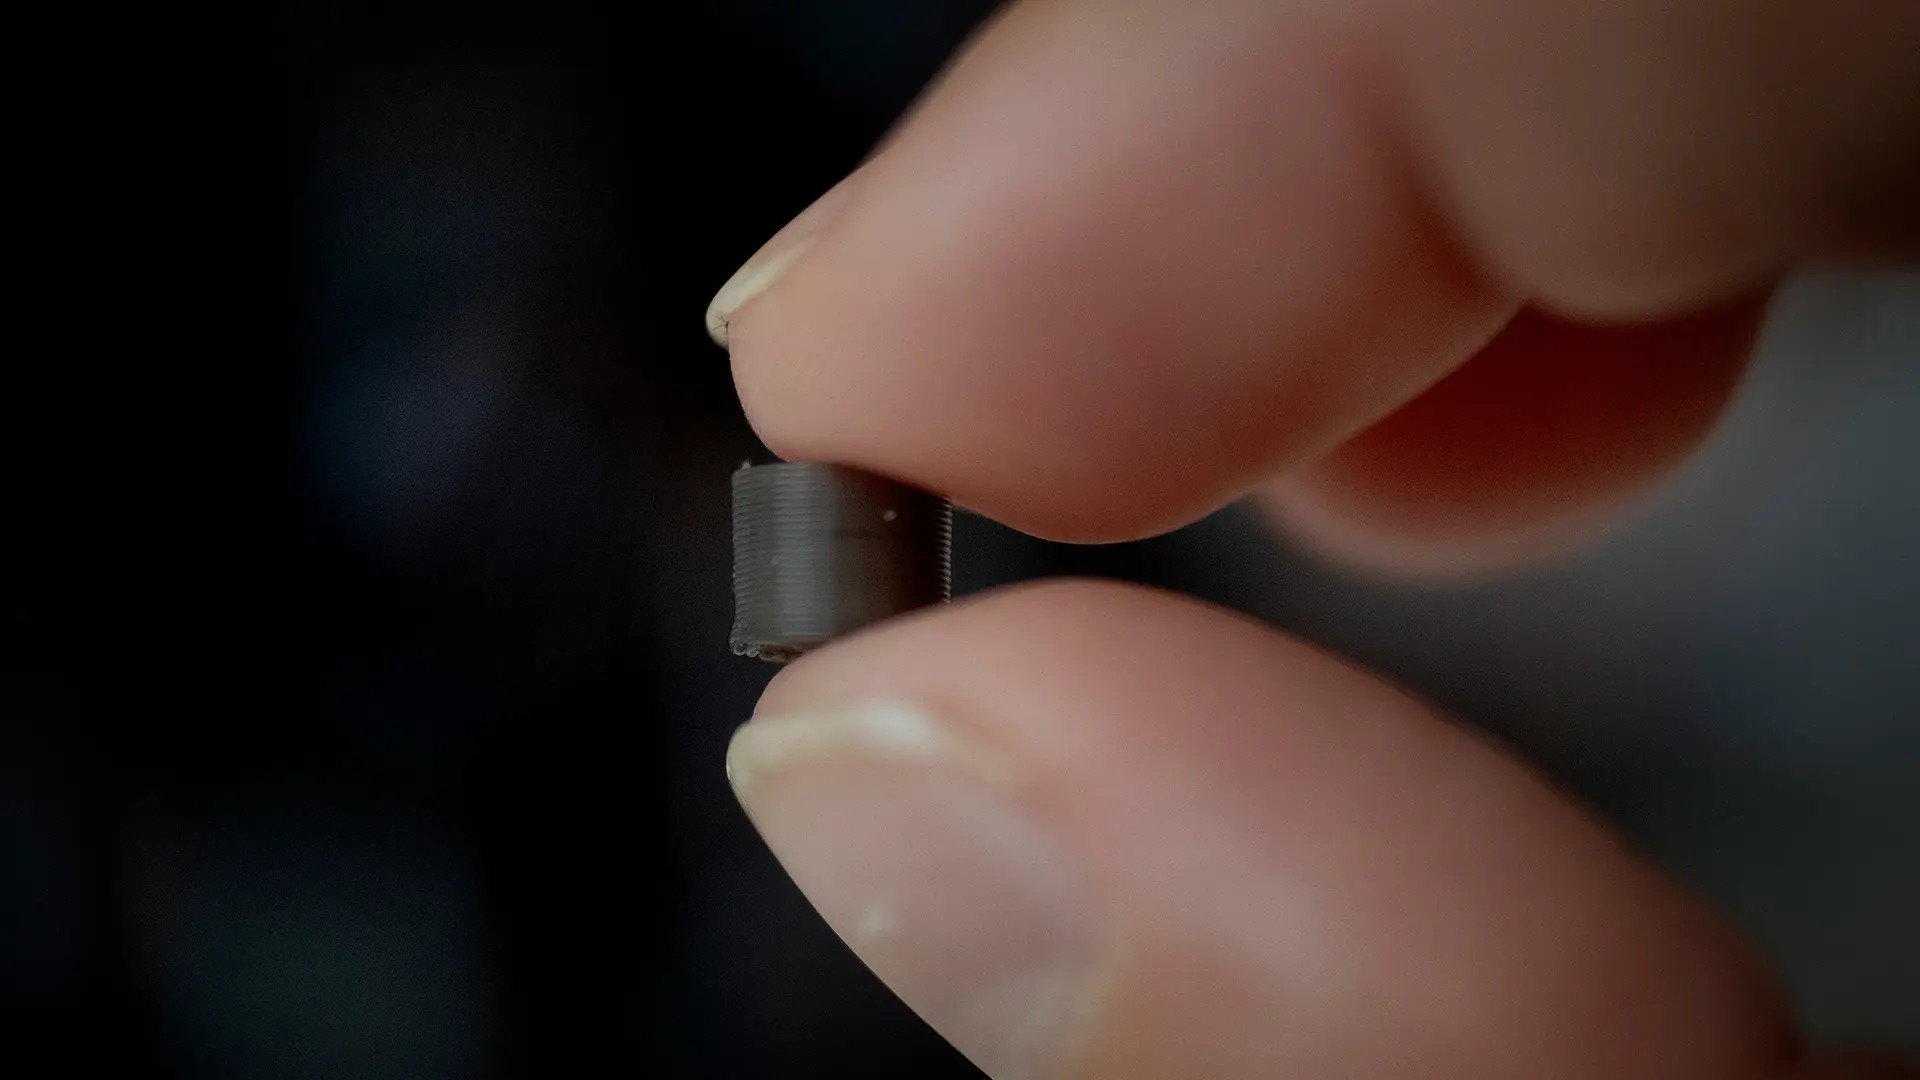 A 3D-printed sensing element made from plasmonic plastic